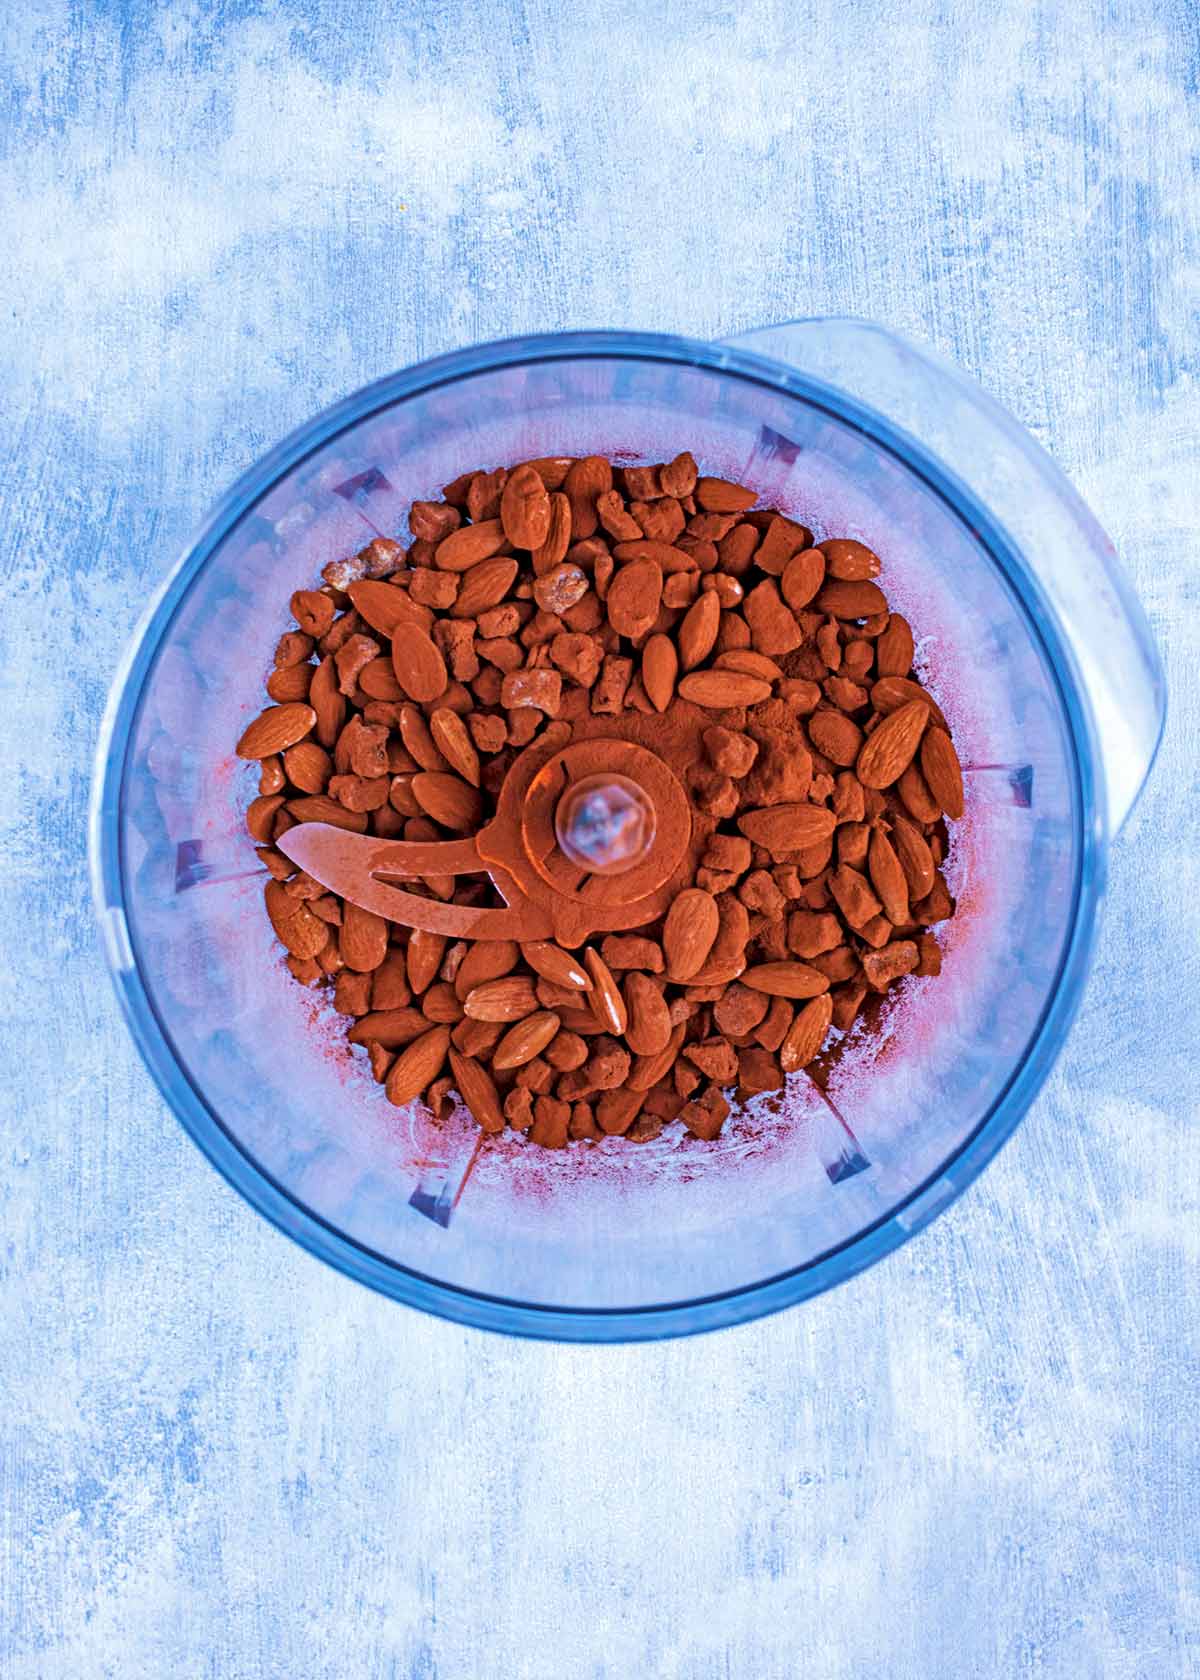 Almonds and cocoa powder in a food processor.